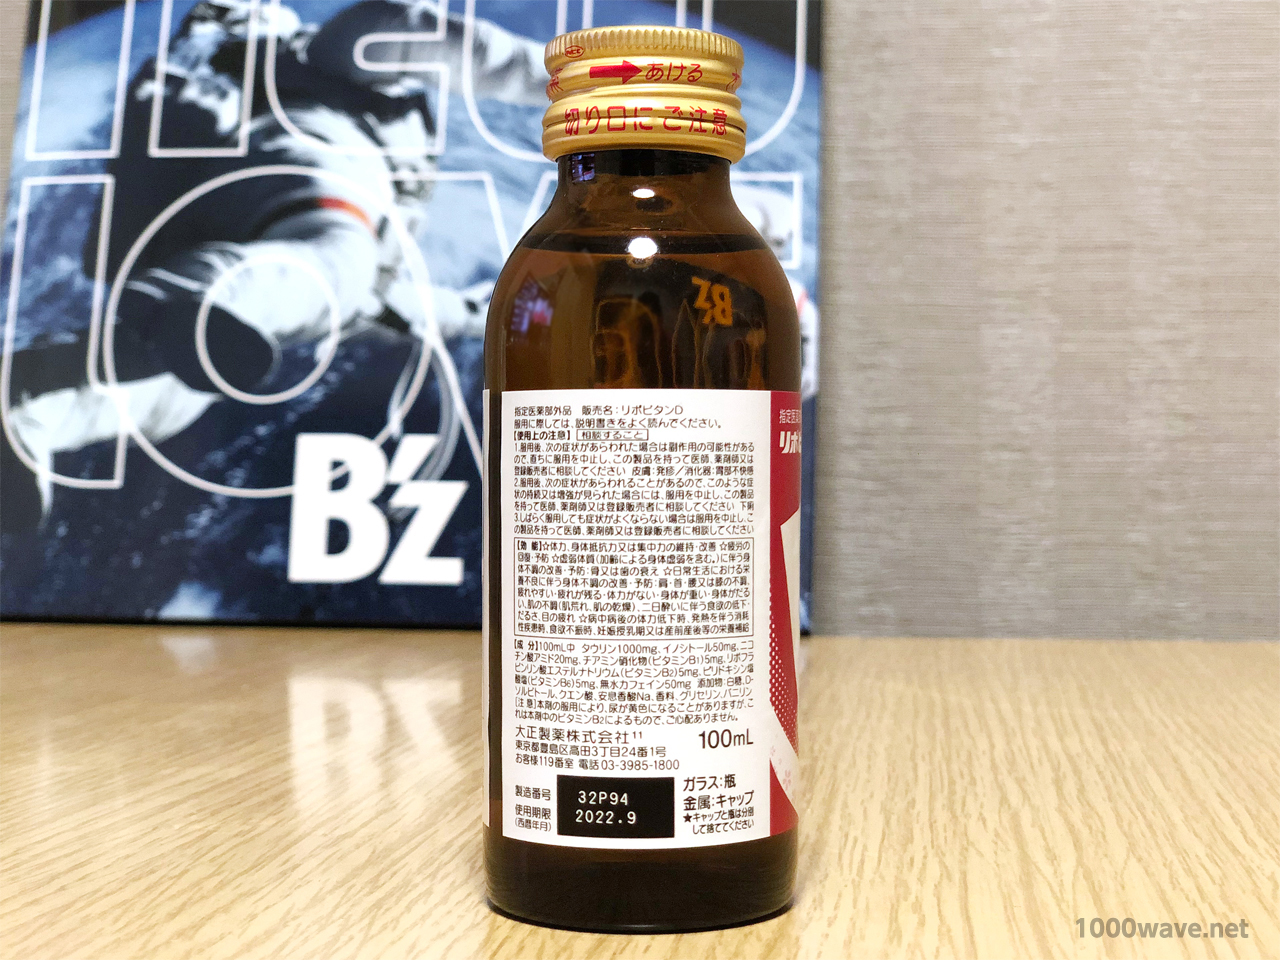 B'z NEW LOVE店頭DAY抽選会購入特典B'z×リポビタンDコラボ限定ボトルの裏パッケージ